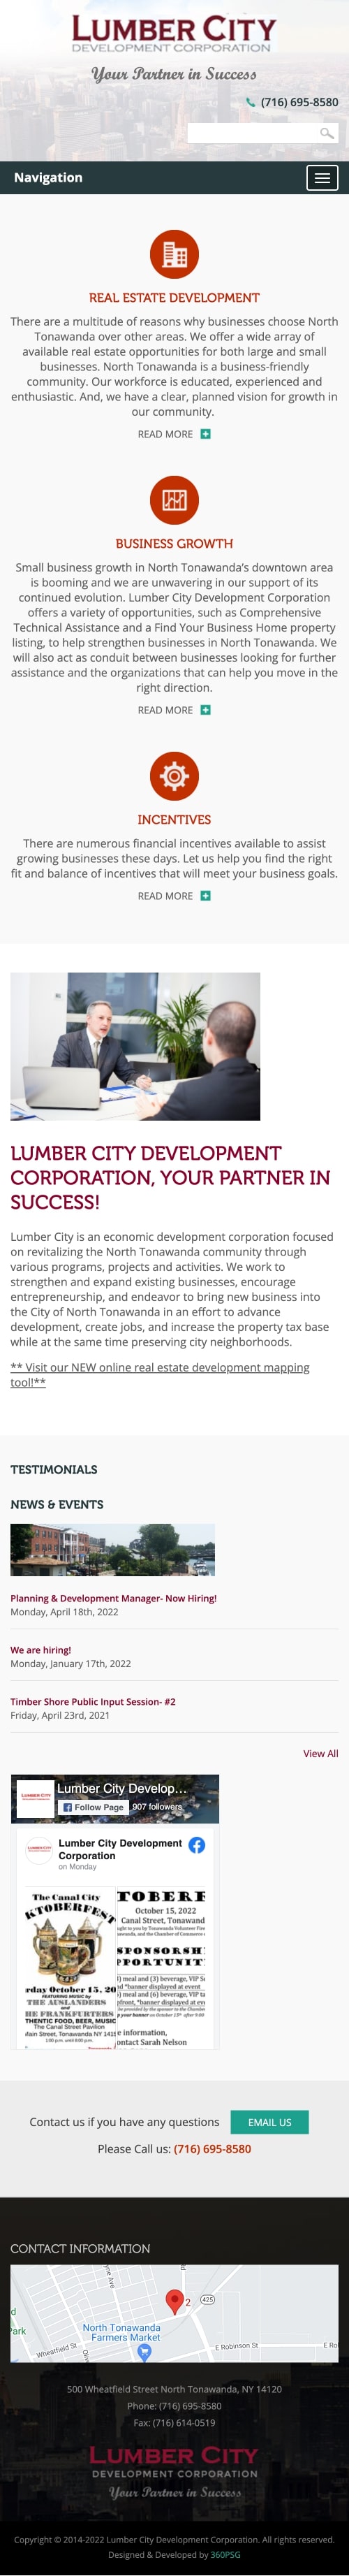 Lumber City Development Corporation Website - Mobile